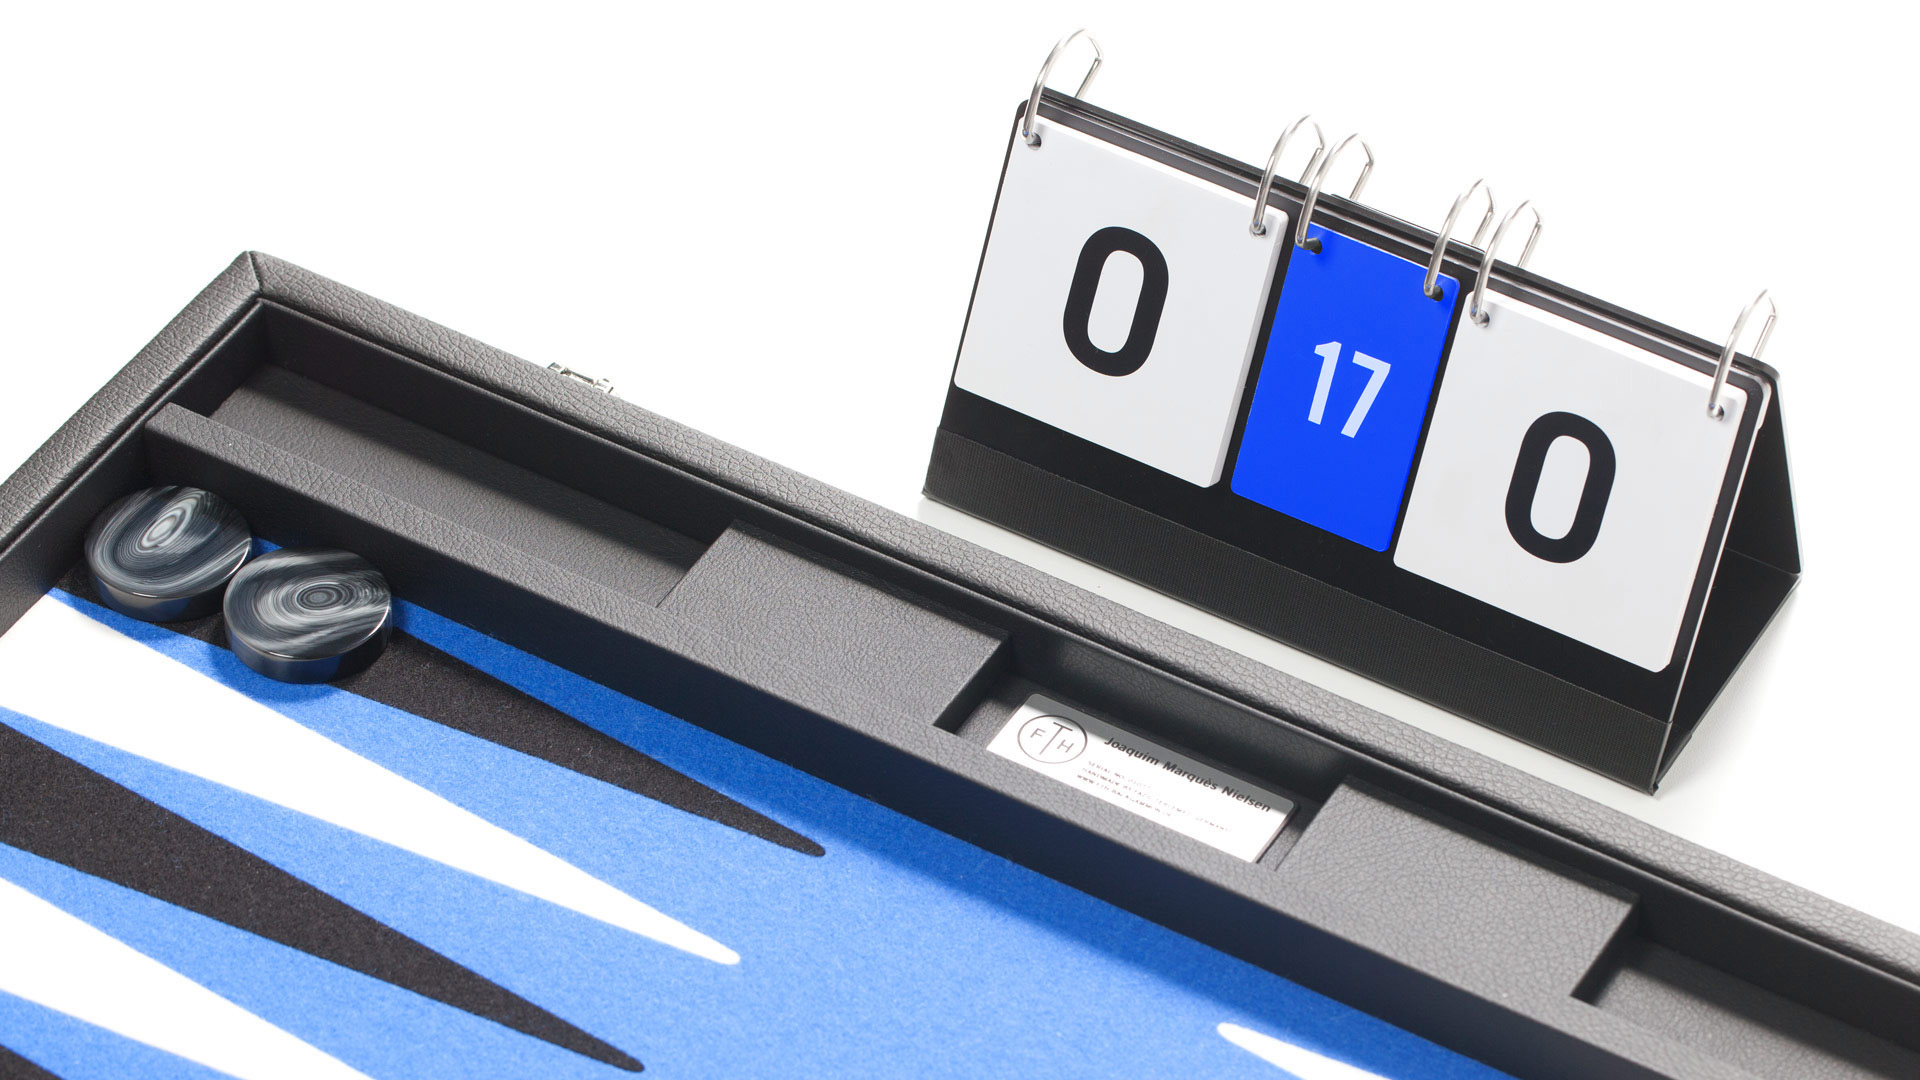 Has anyone built their own score board board? : r/backgammon